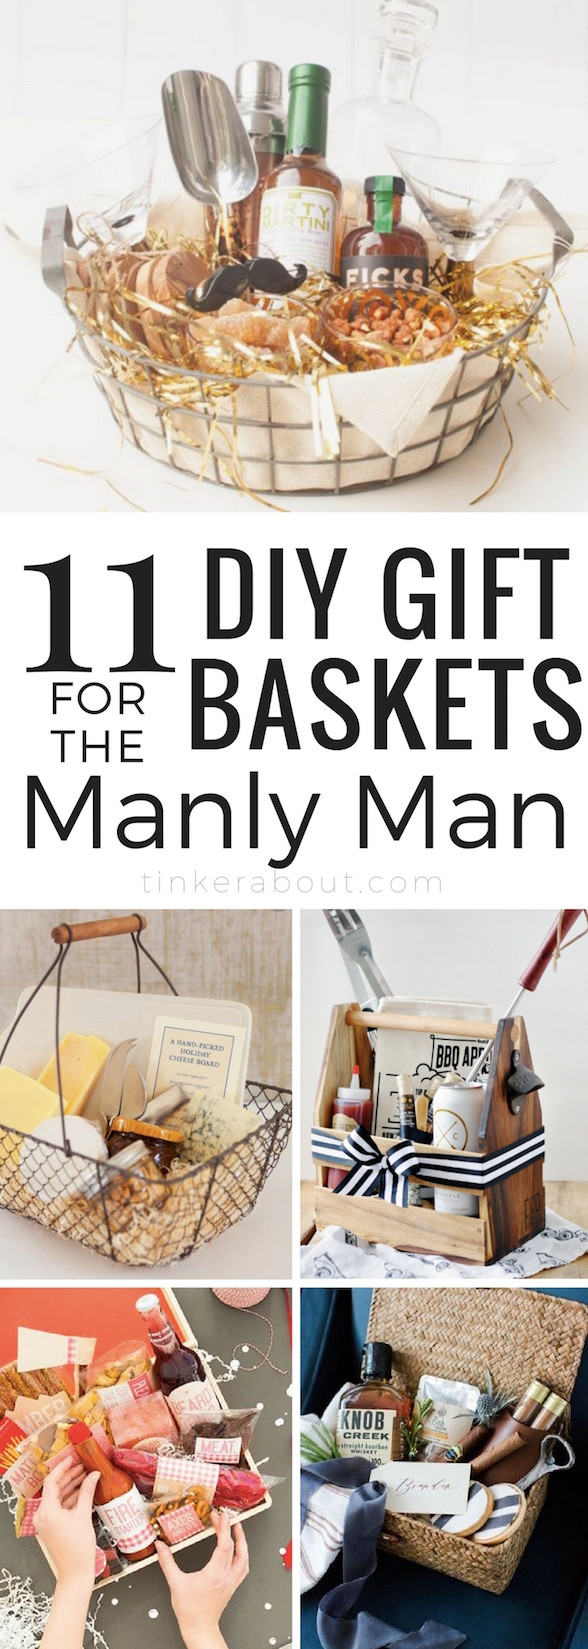 Gift Basket Ideas For Guys
 11 Best Gift Basket Ideas For Him